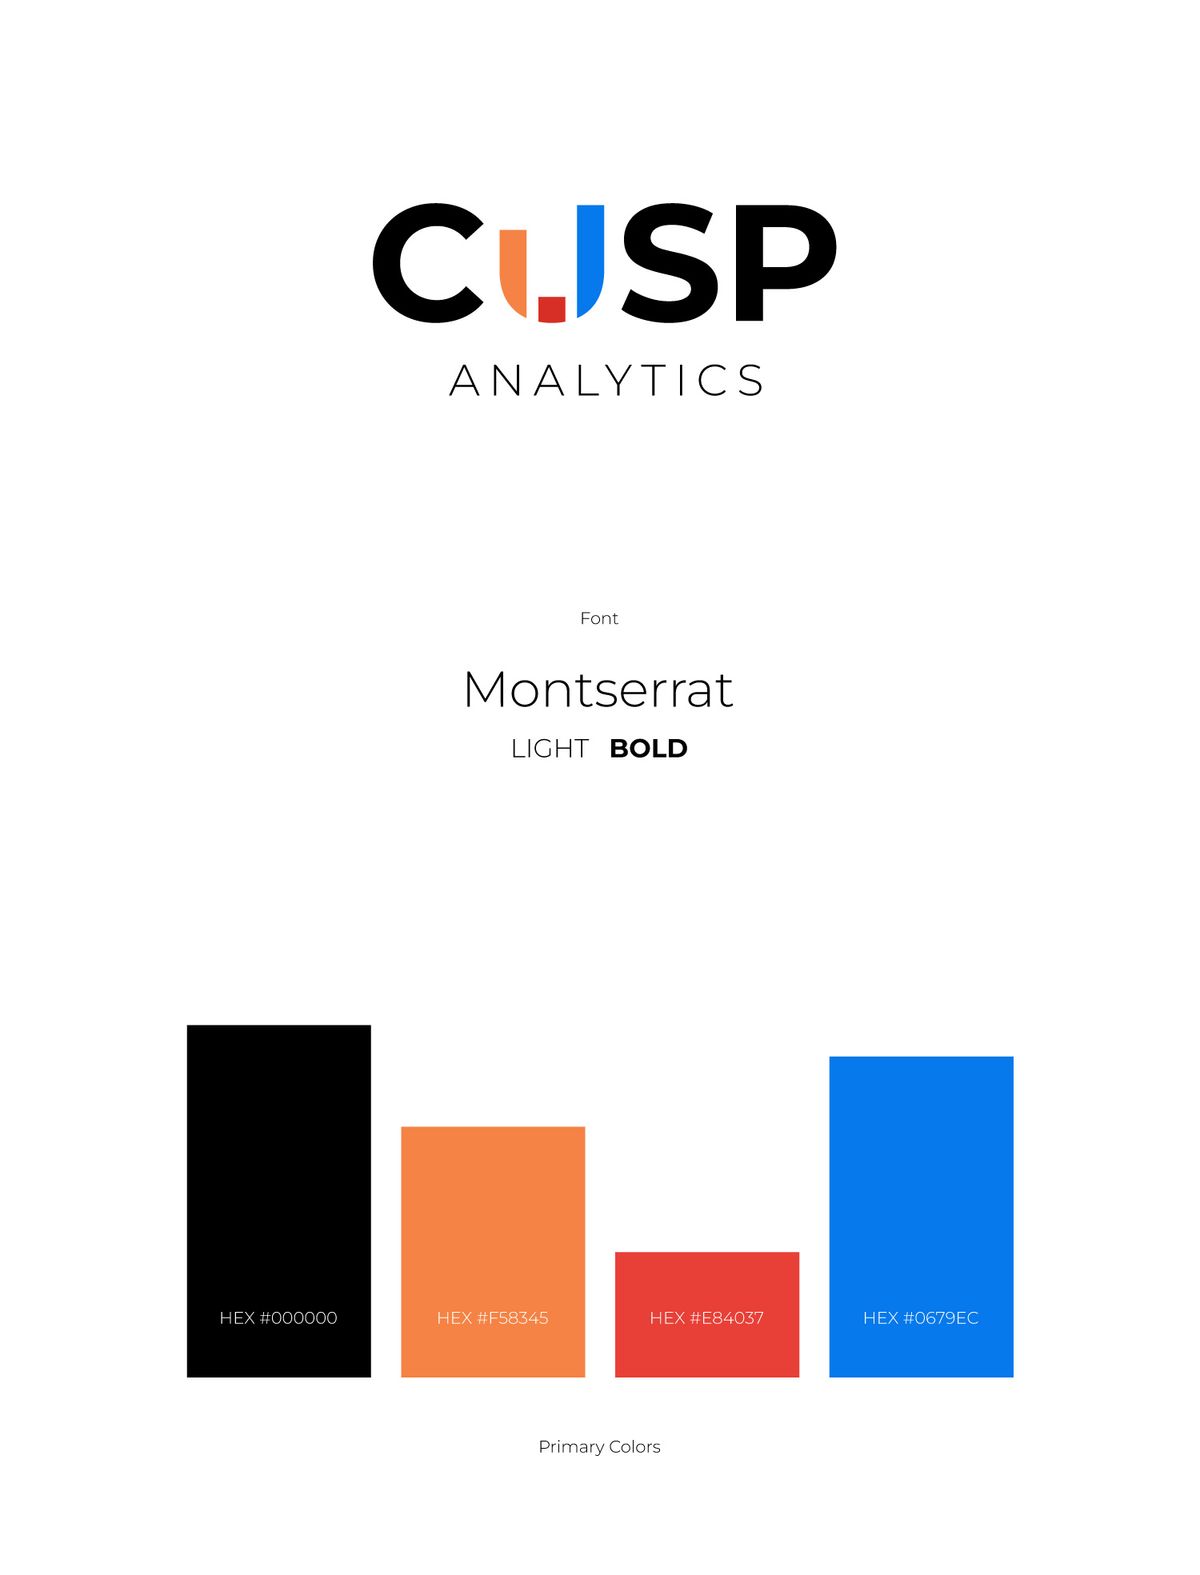 CUSP Analytics Logo & Branding Book Illustration 1